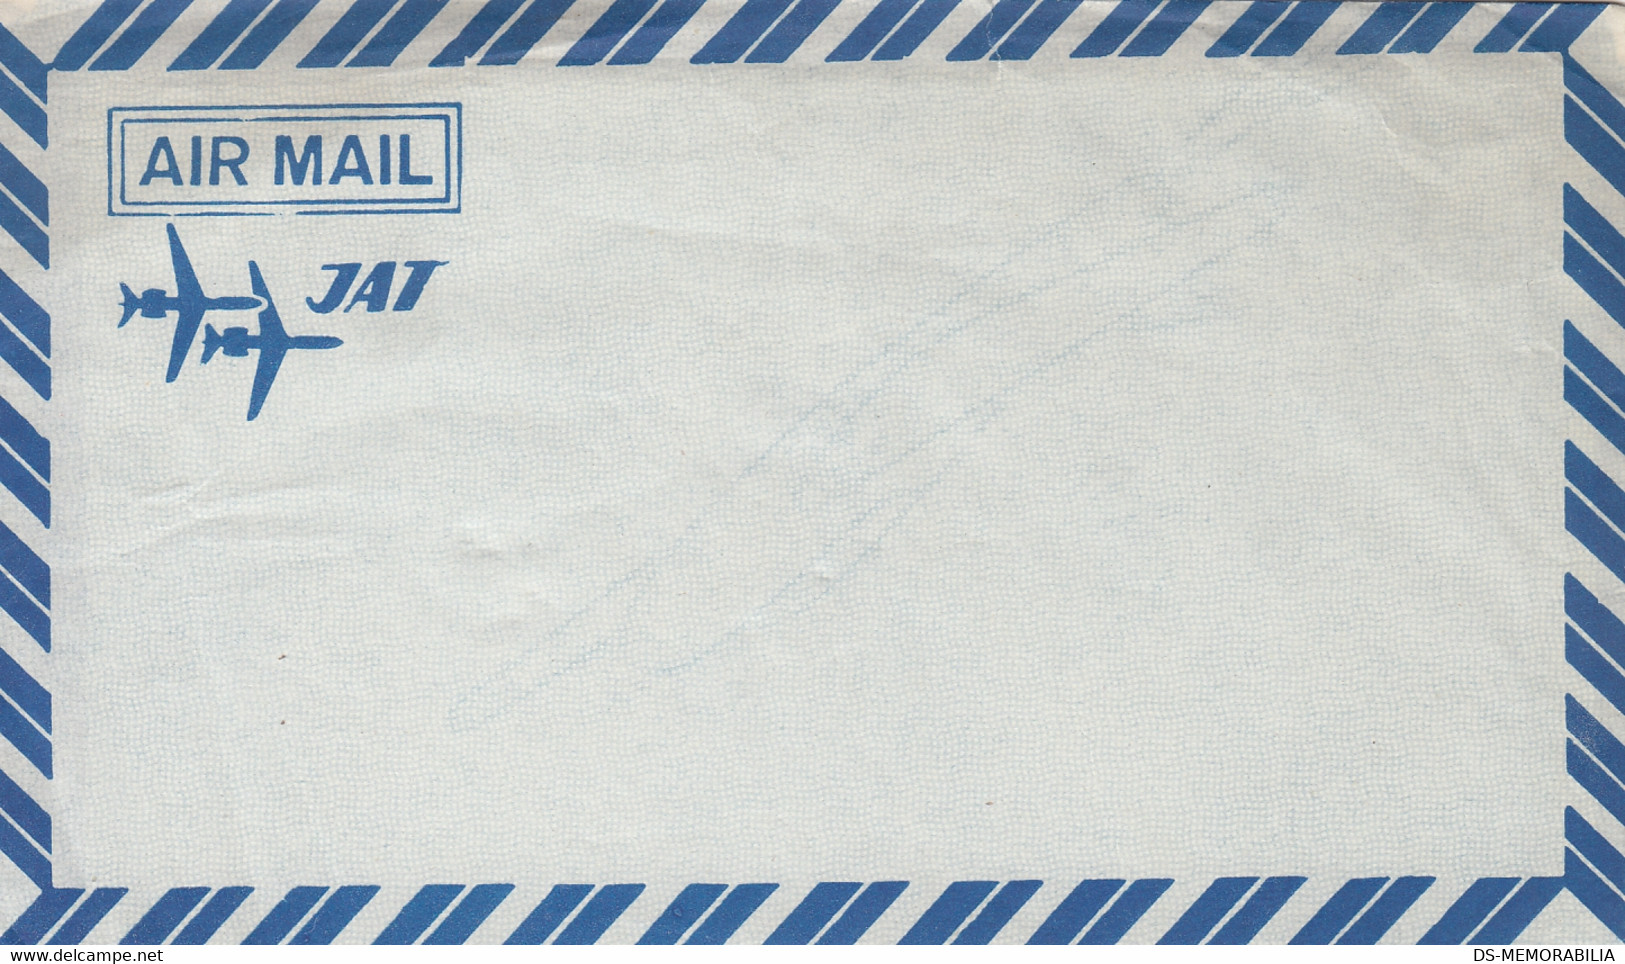 JAT Yugoslav Airlines Advertising Envelope With Paper - Advertisements